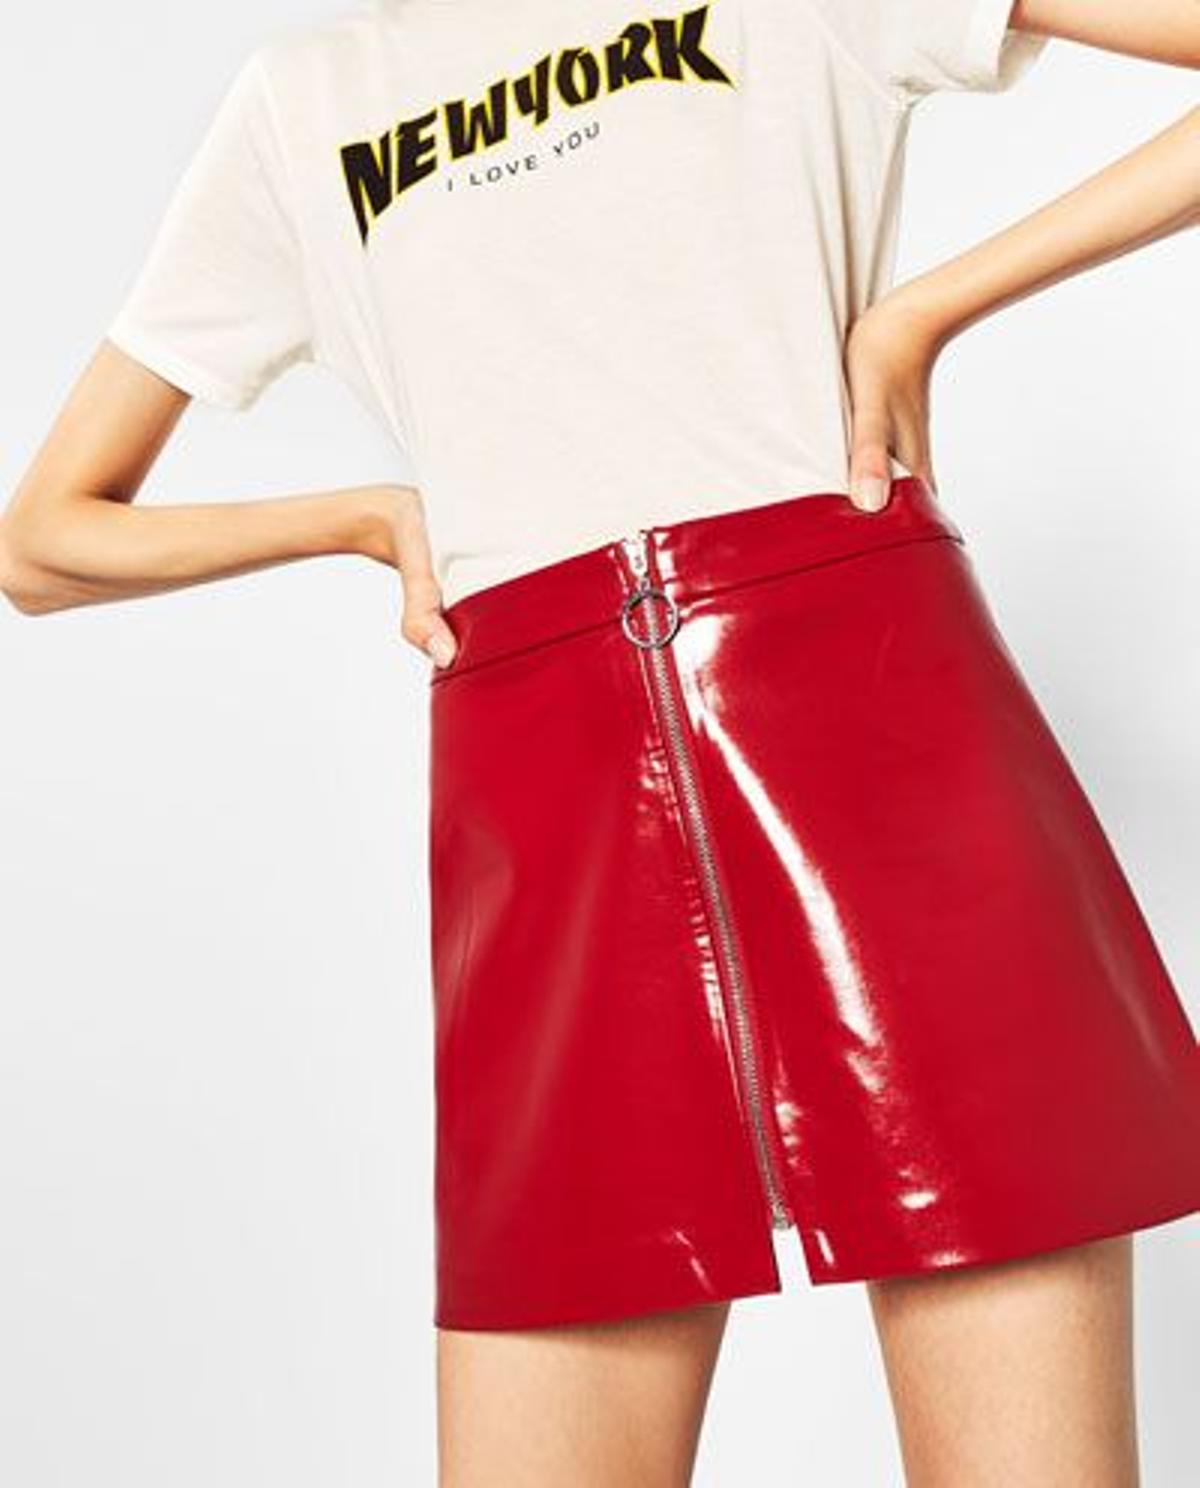 Rebajas 2017, falda mini con cremallera de Zara (15,99€)